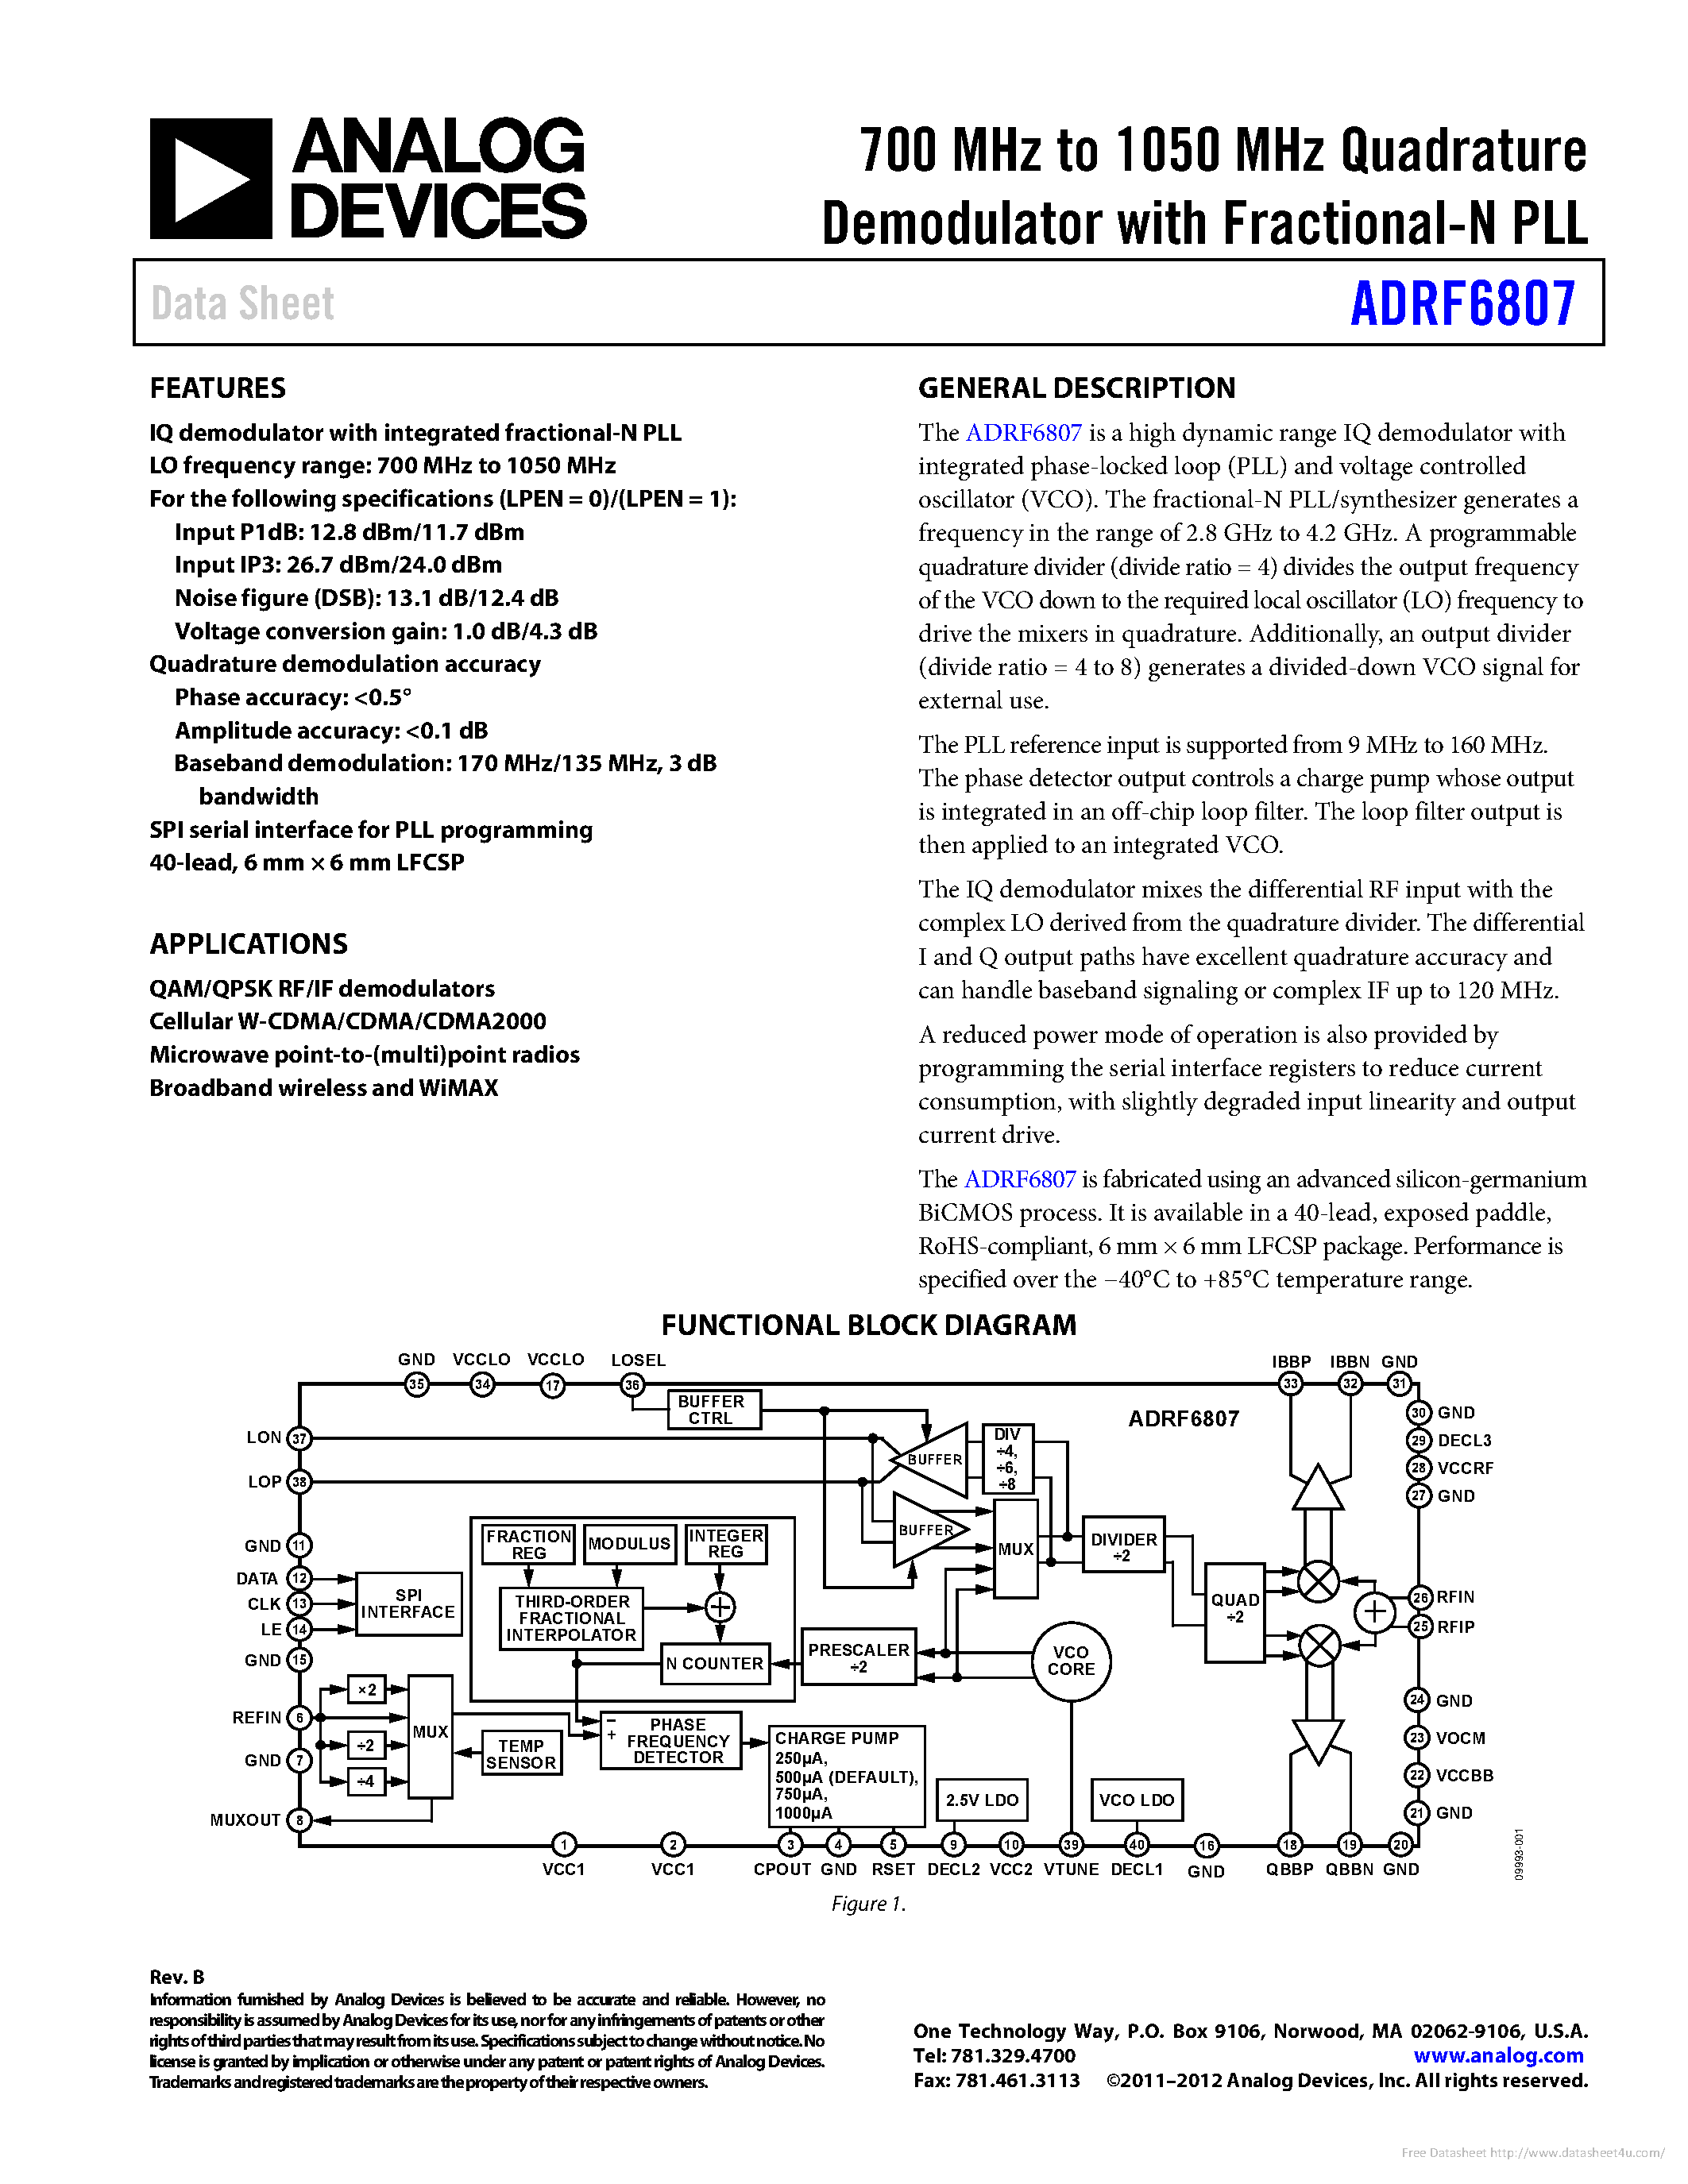 Datasheet ADRF6807 - page 1